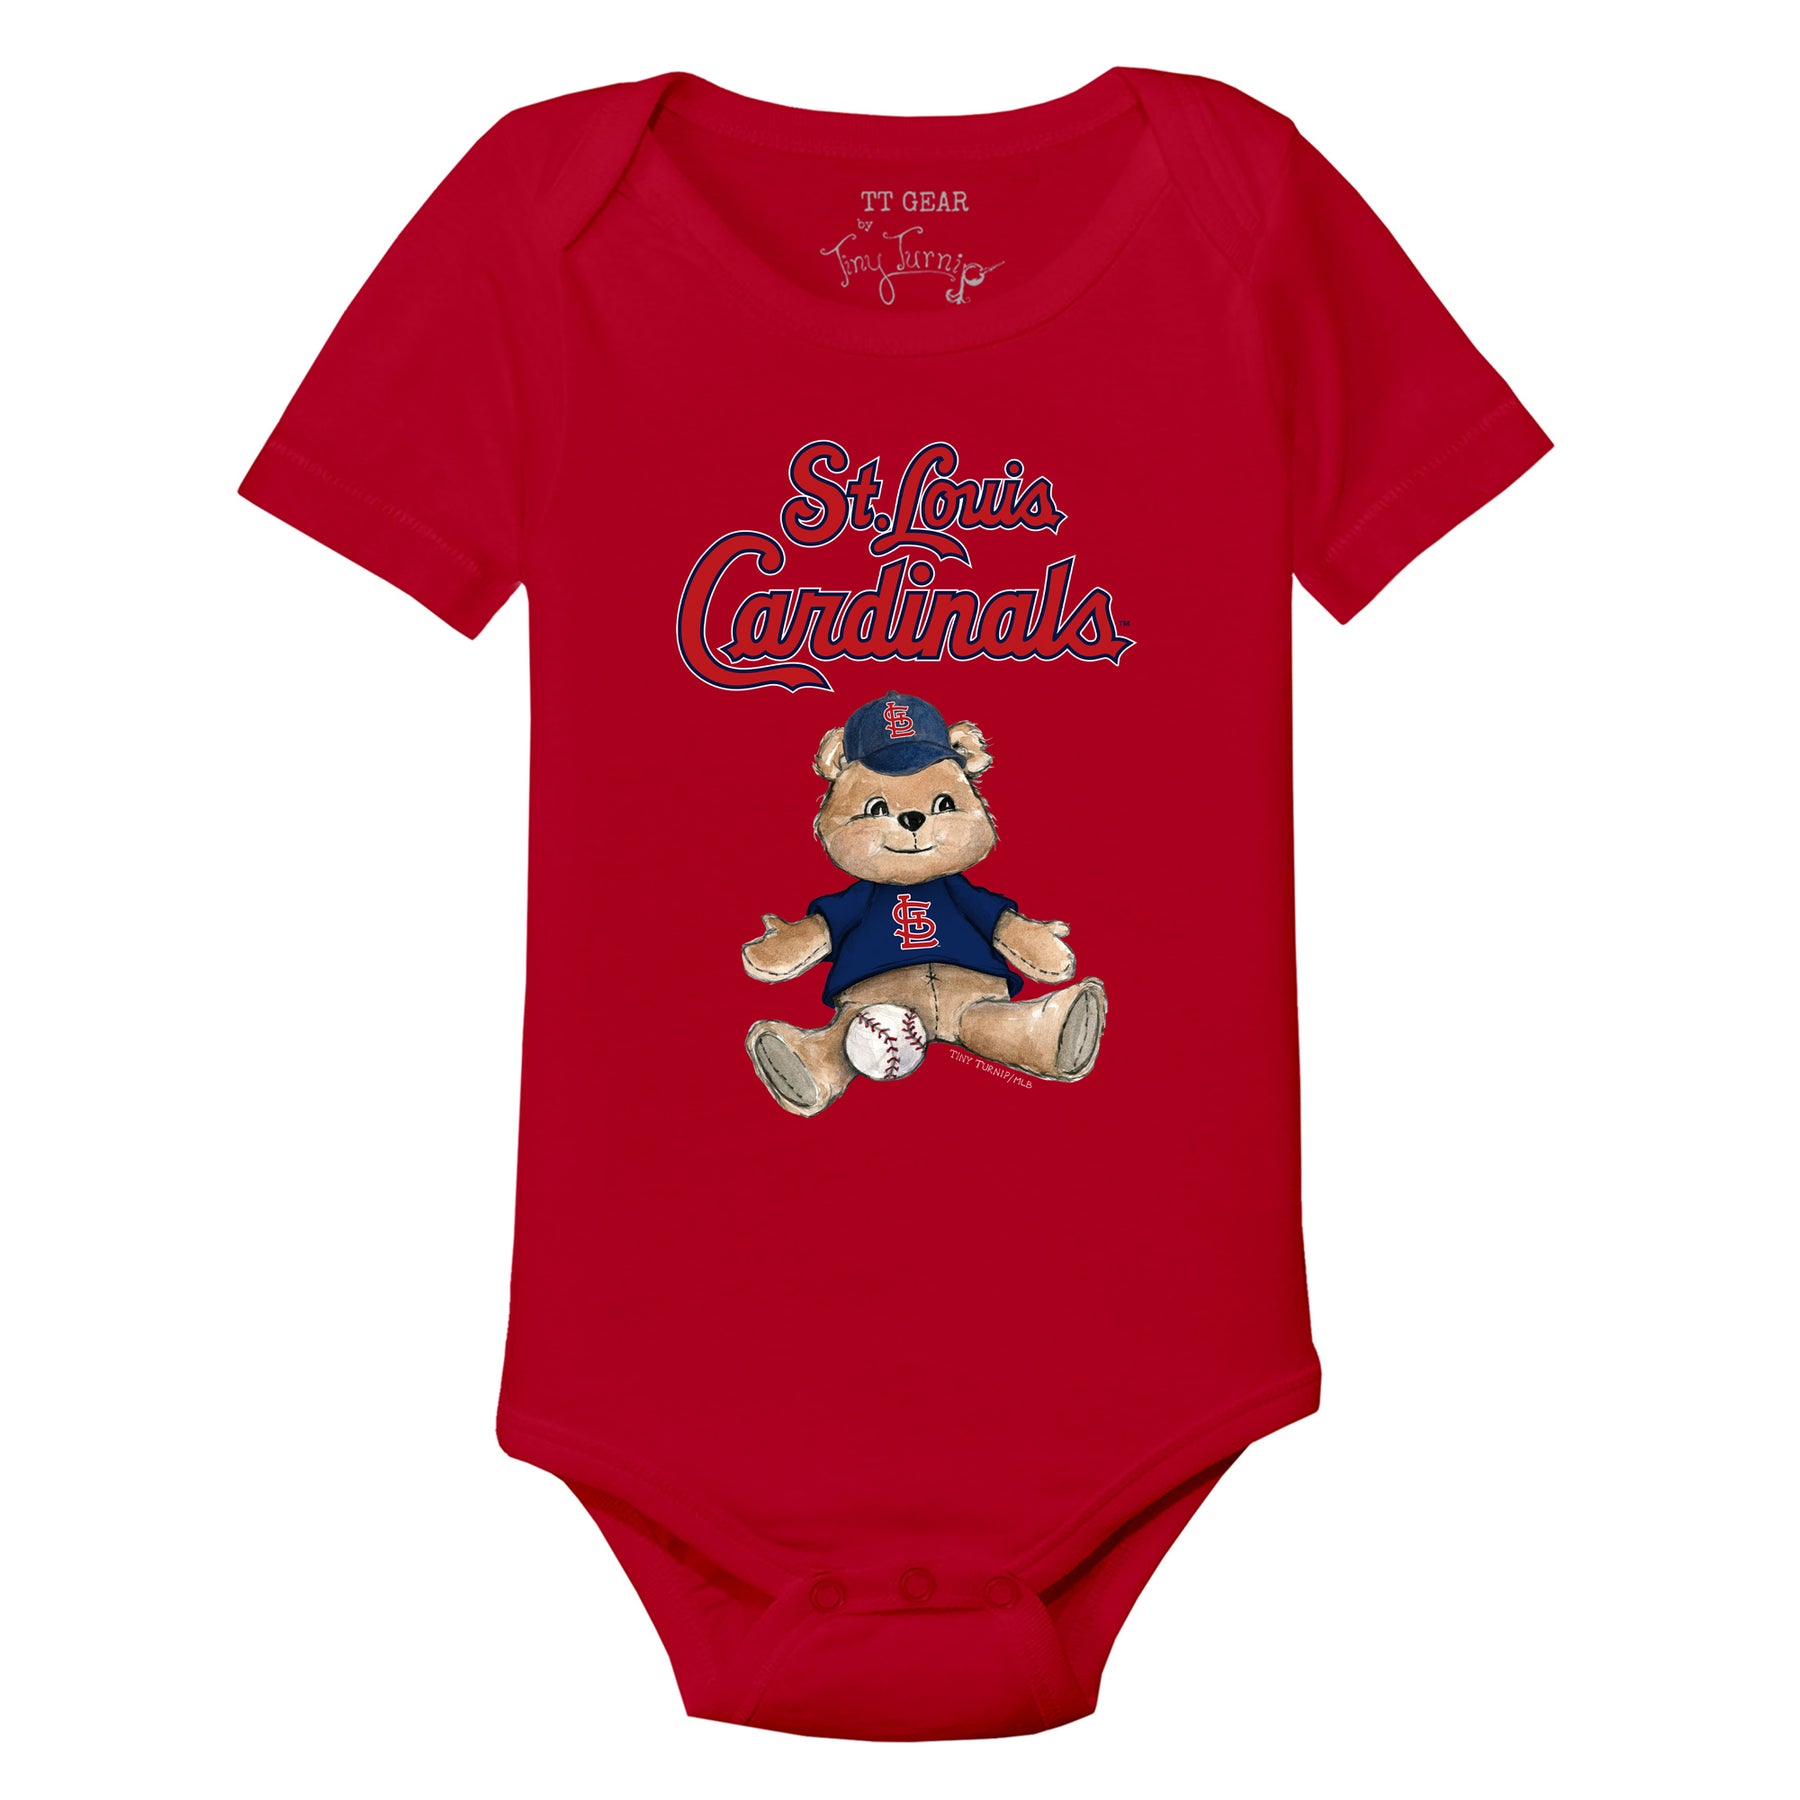 st louis cardinals hoodie toddler